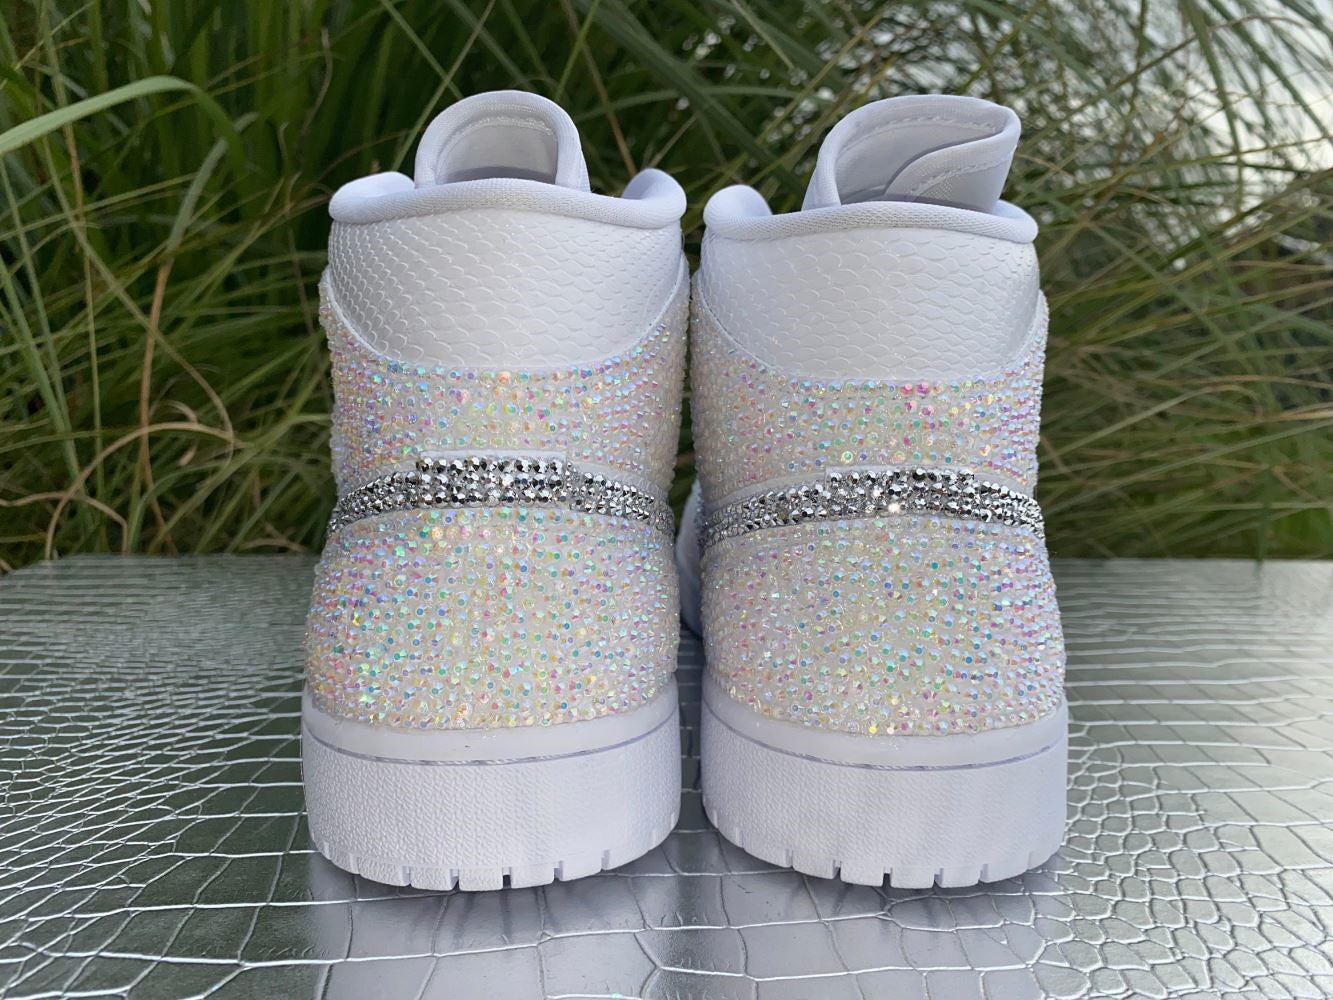 Colorful Blinks Custom Air Jordan 1 x Wedding Sneaker